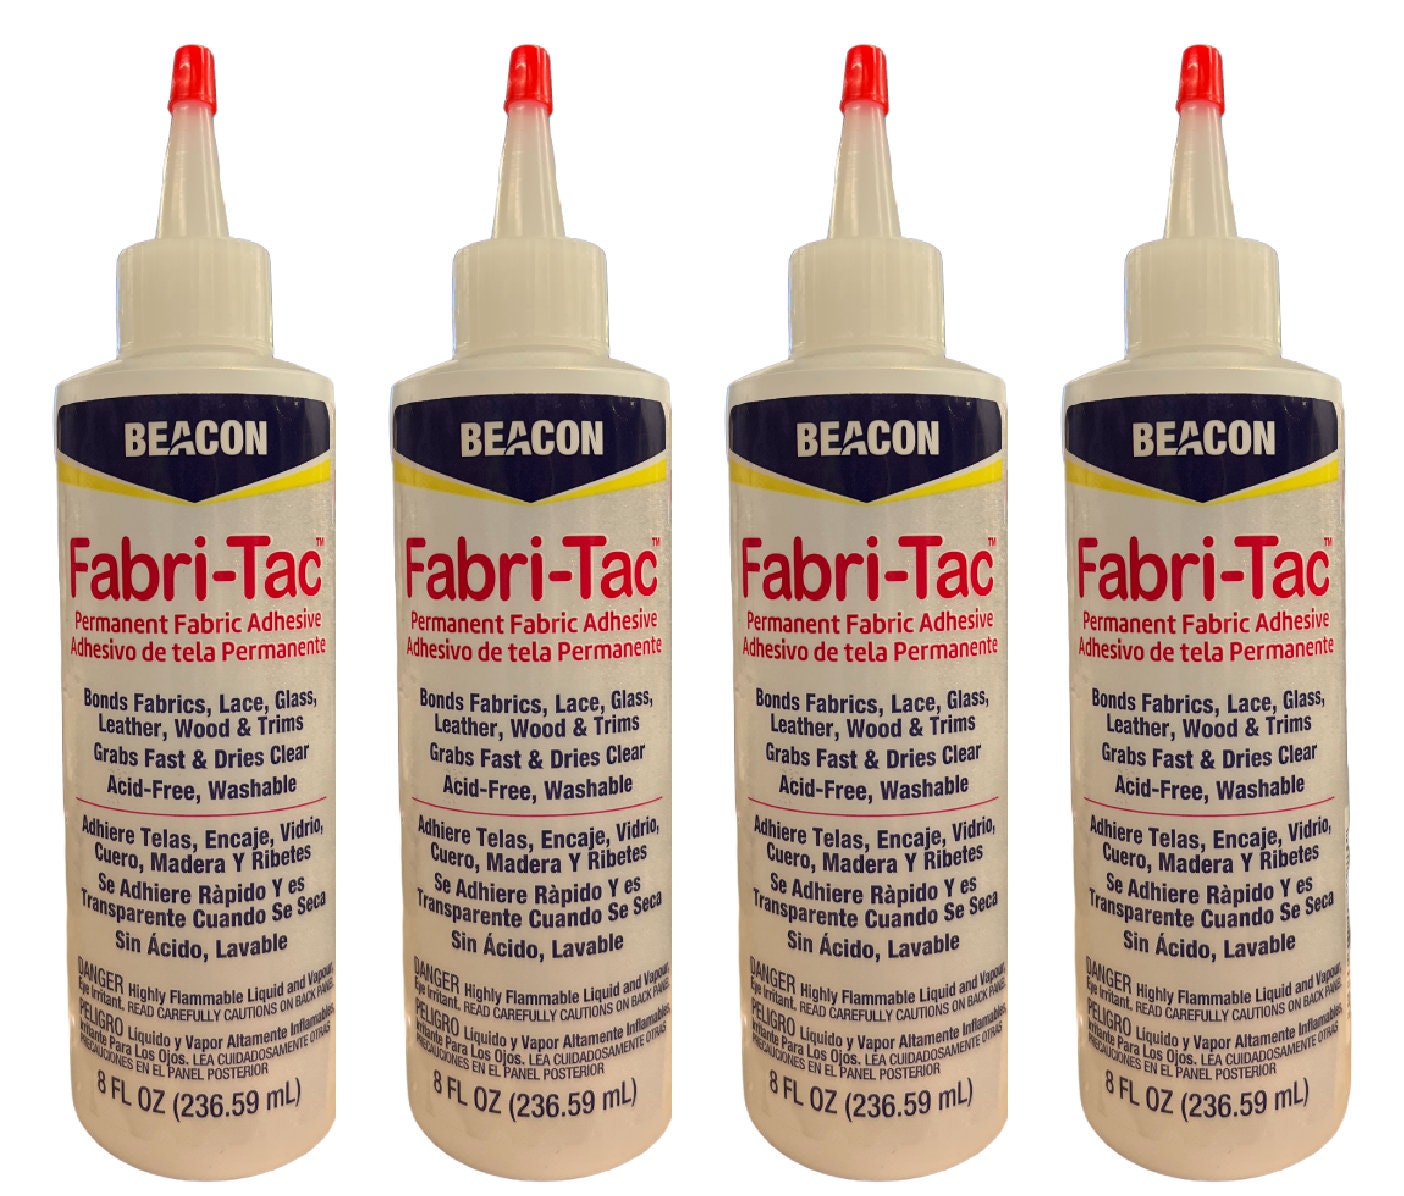 Beacon Fabri-tac Permanent Fabric Adhesive 4 Oz. 